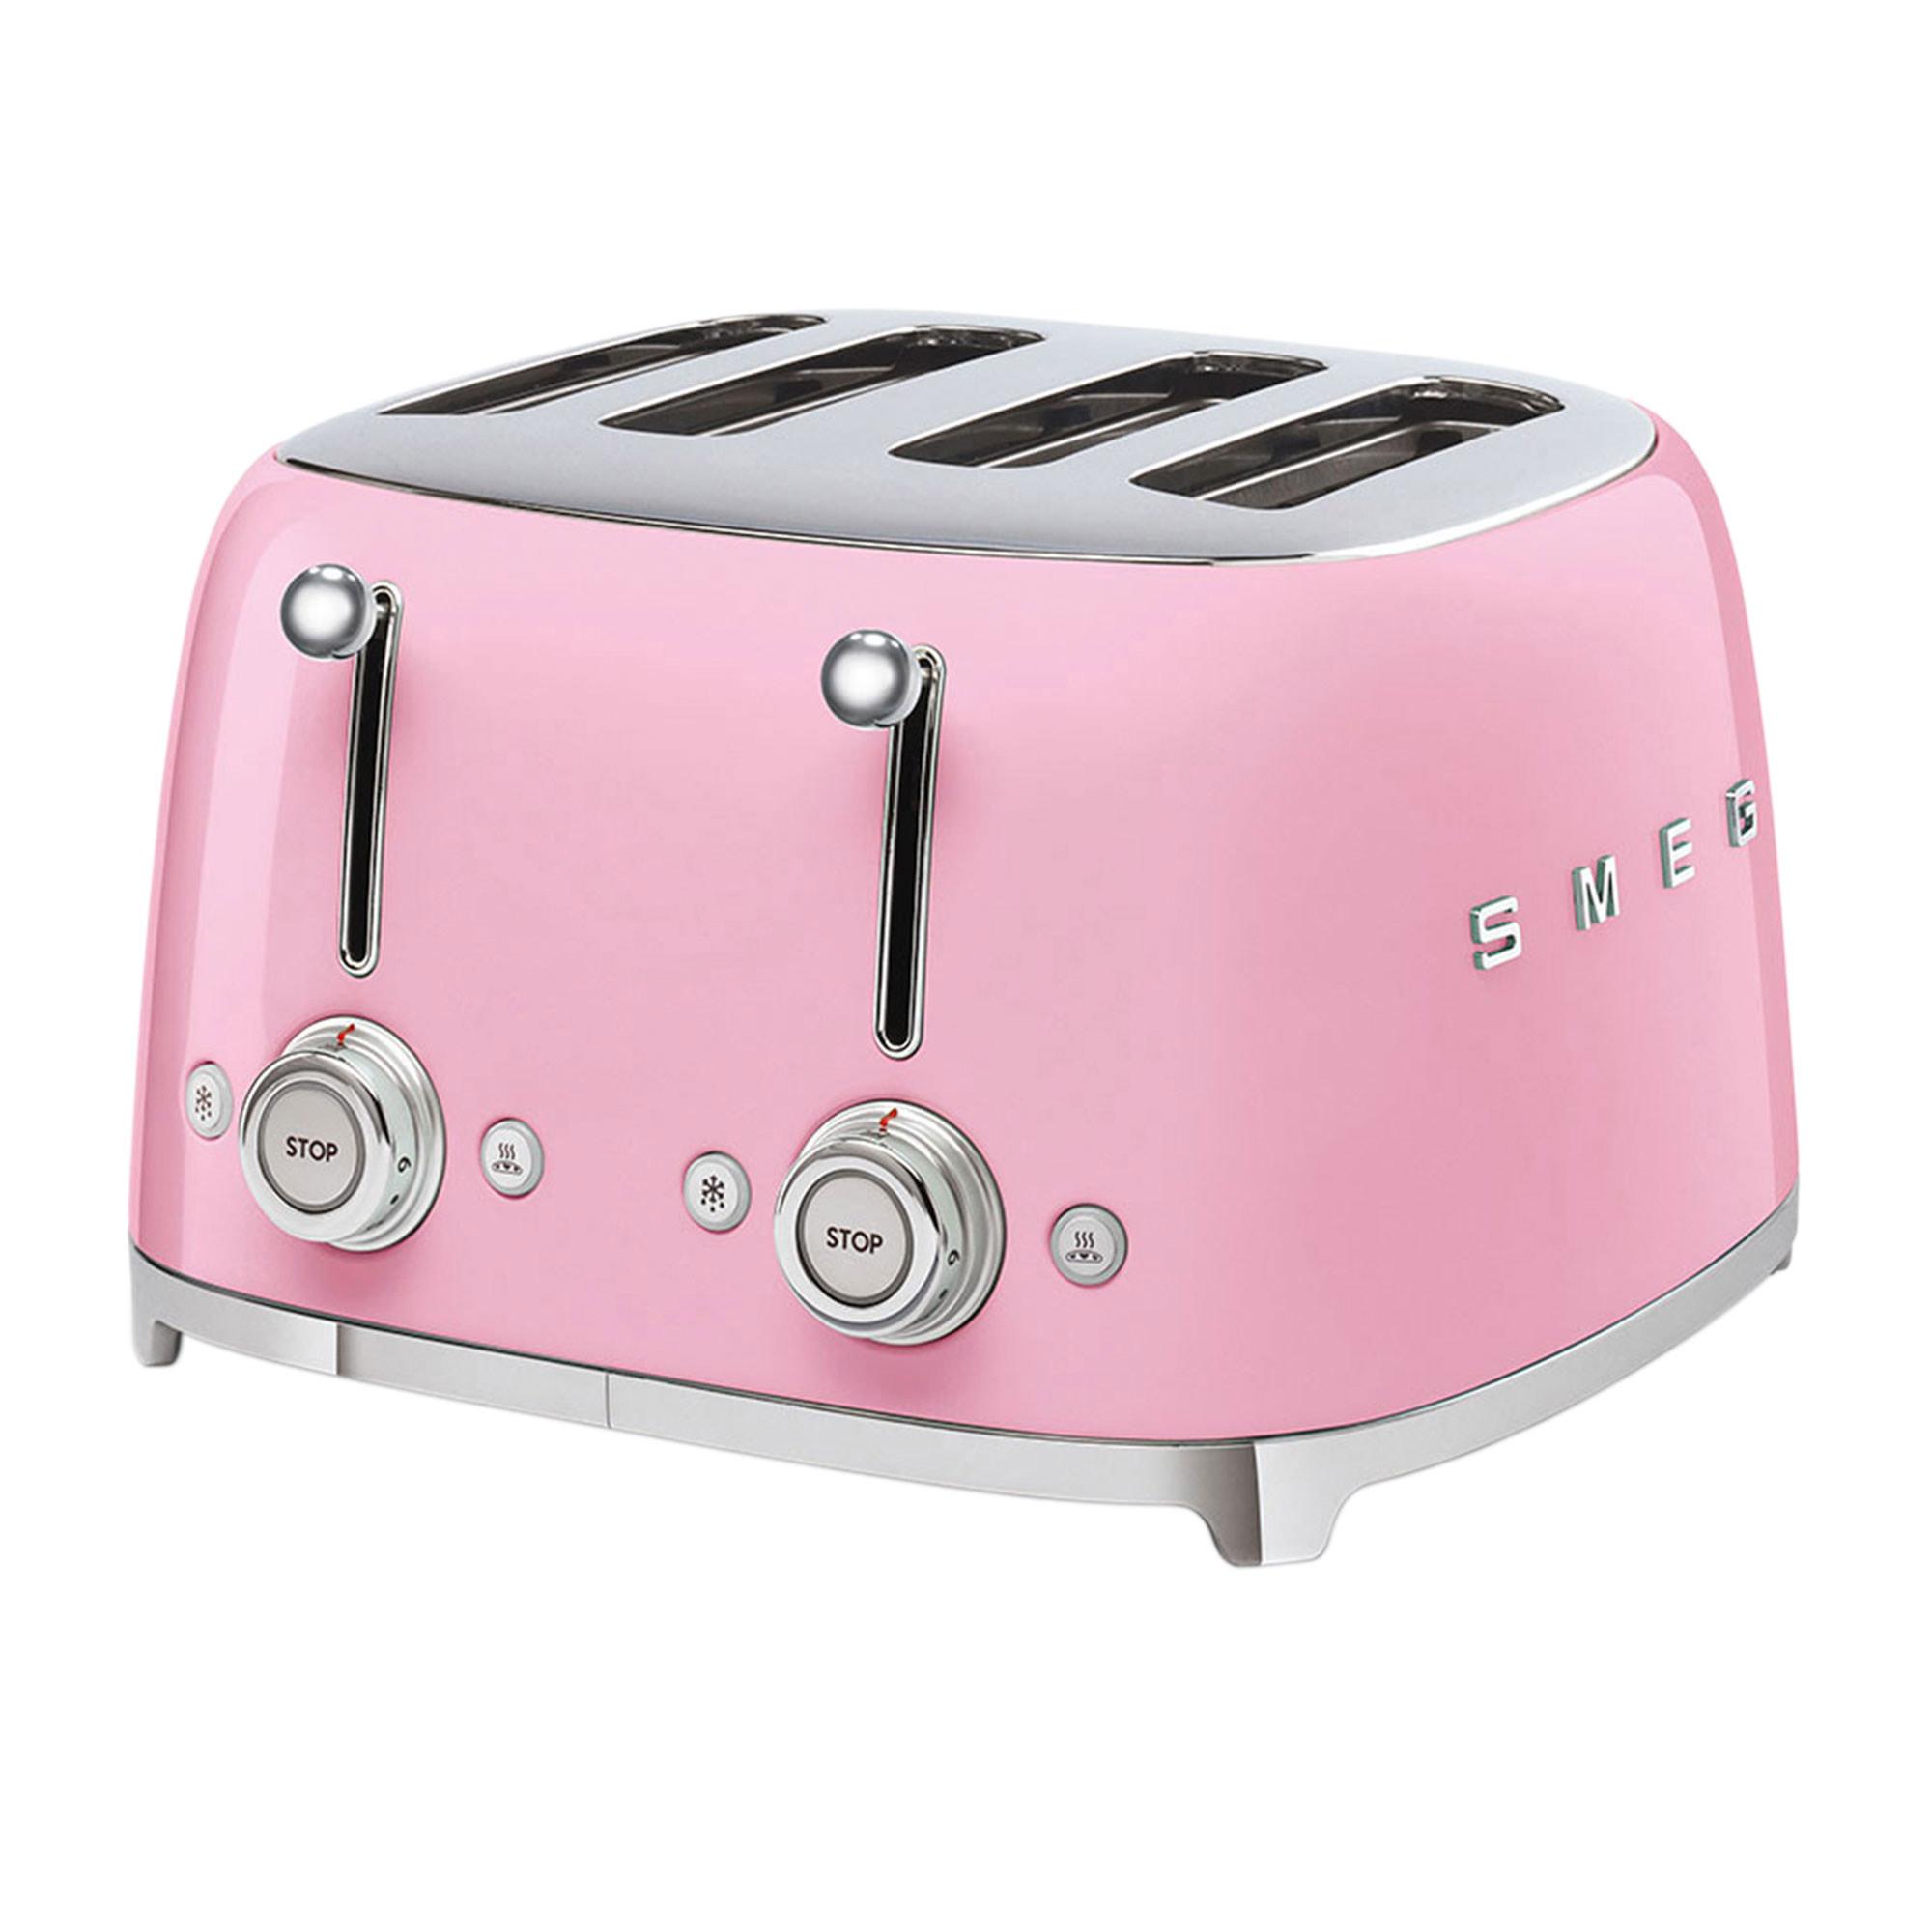 Smeg 50's Retro Style 4 Slot Toaster Pink Image 1